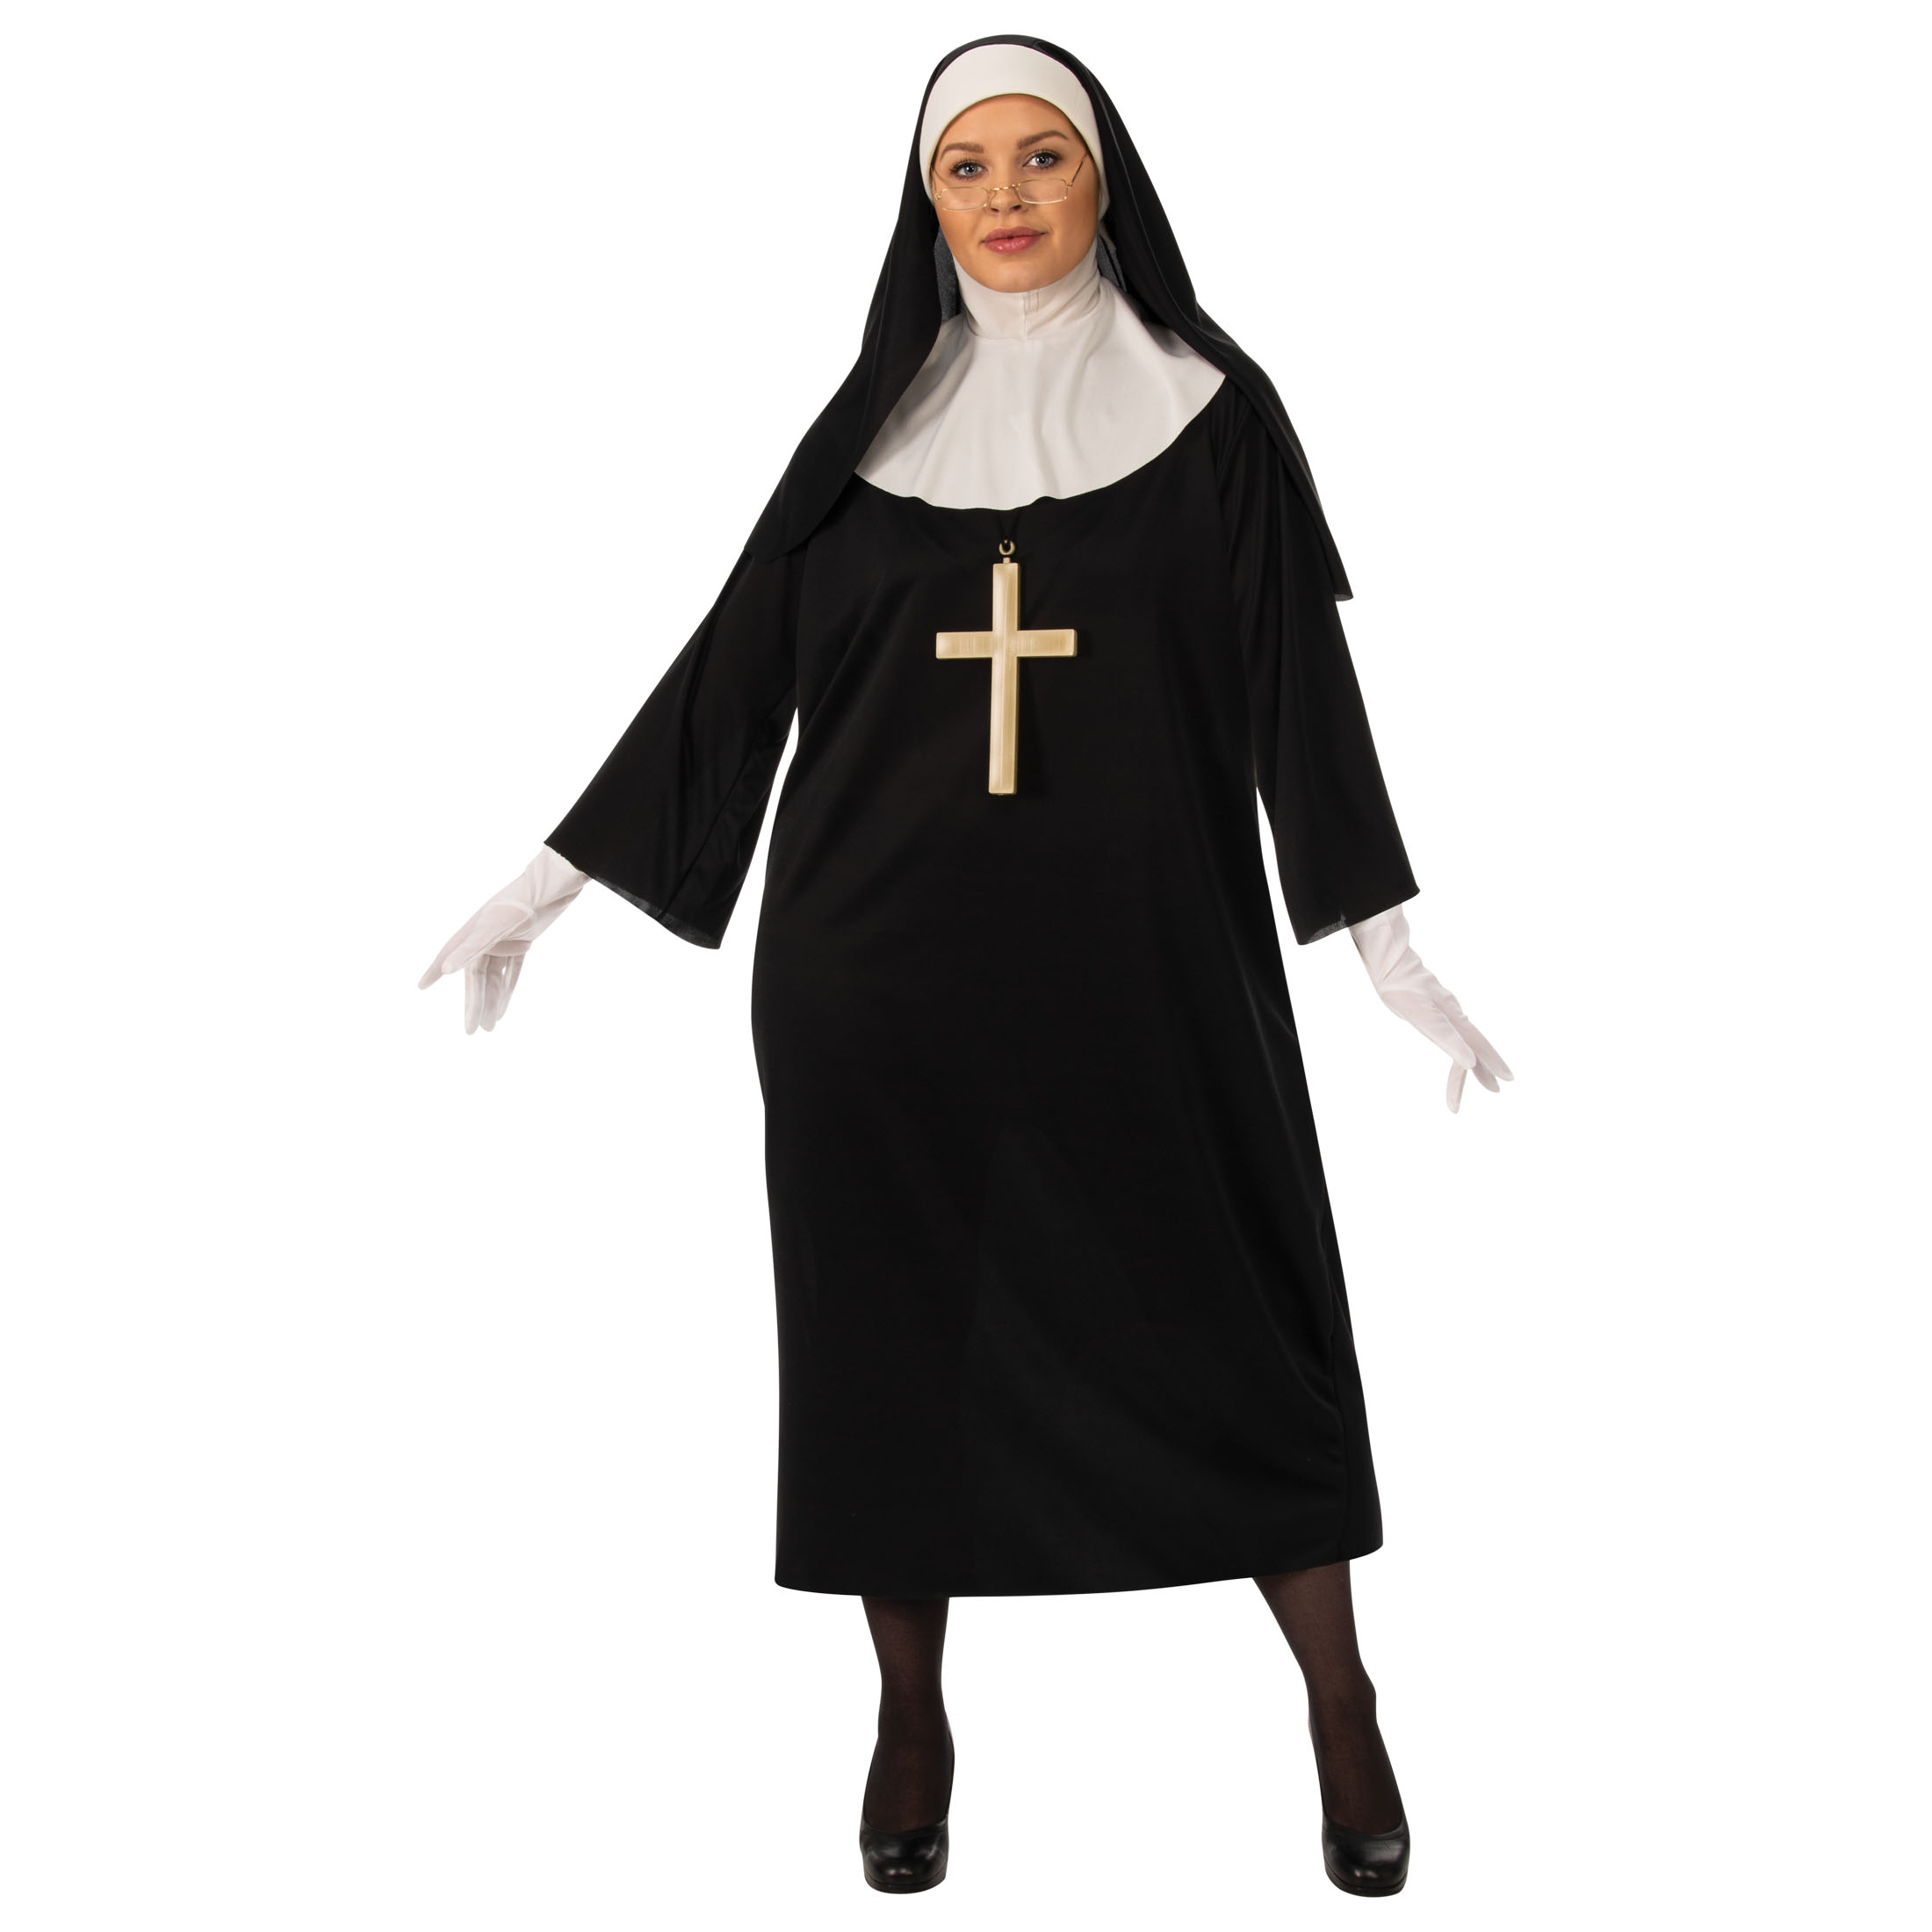 Nun Adult Women's Halloween Costume XXL By Rubies II - image 1 of 7